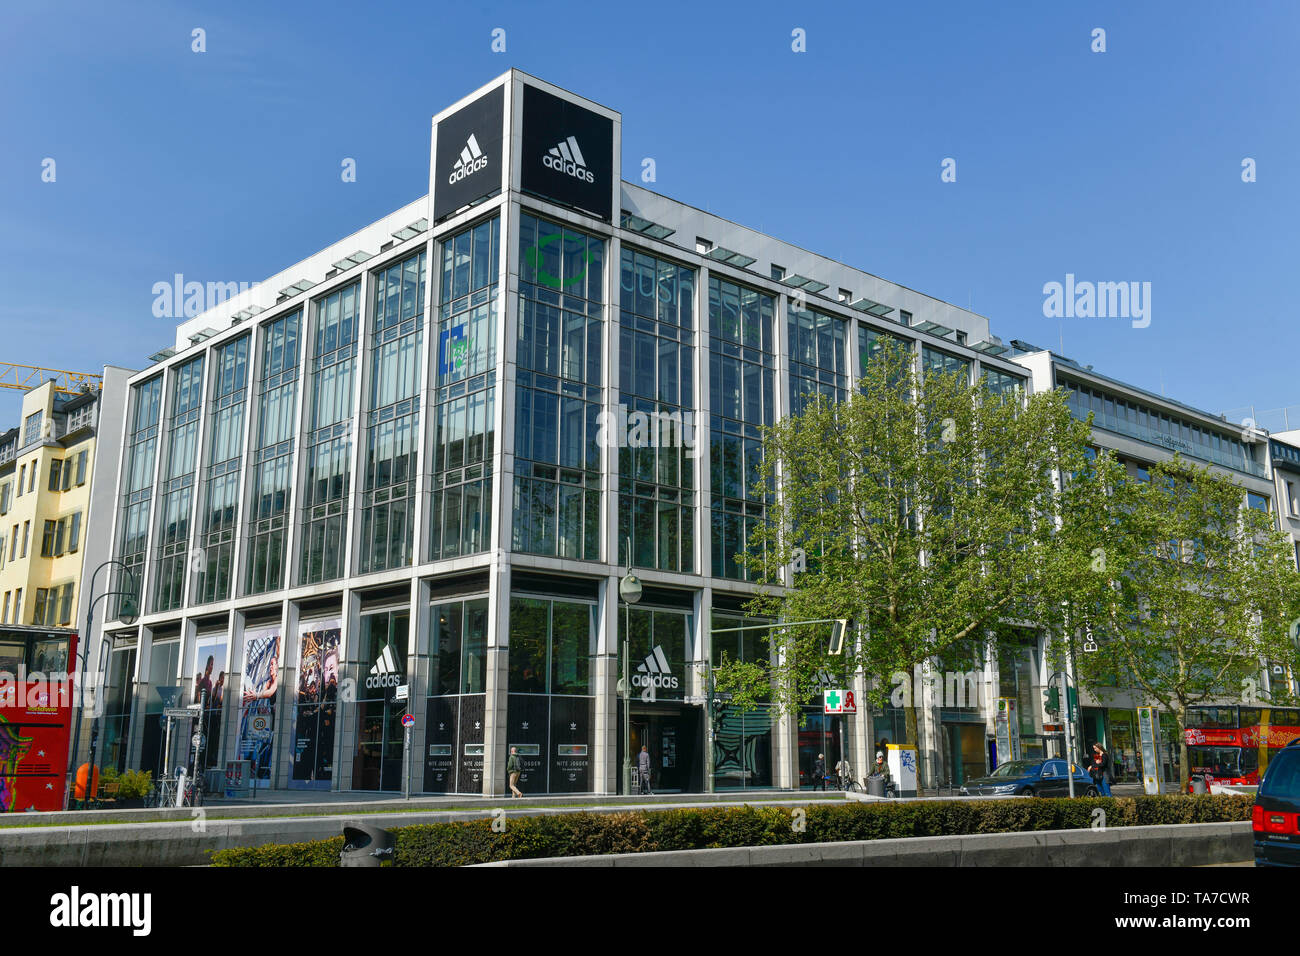 Identity Oppose Hold projektör yarımküre Uyuklama adidas mall of berlin inanç Ocak deneysel